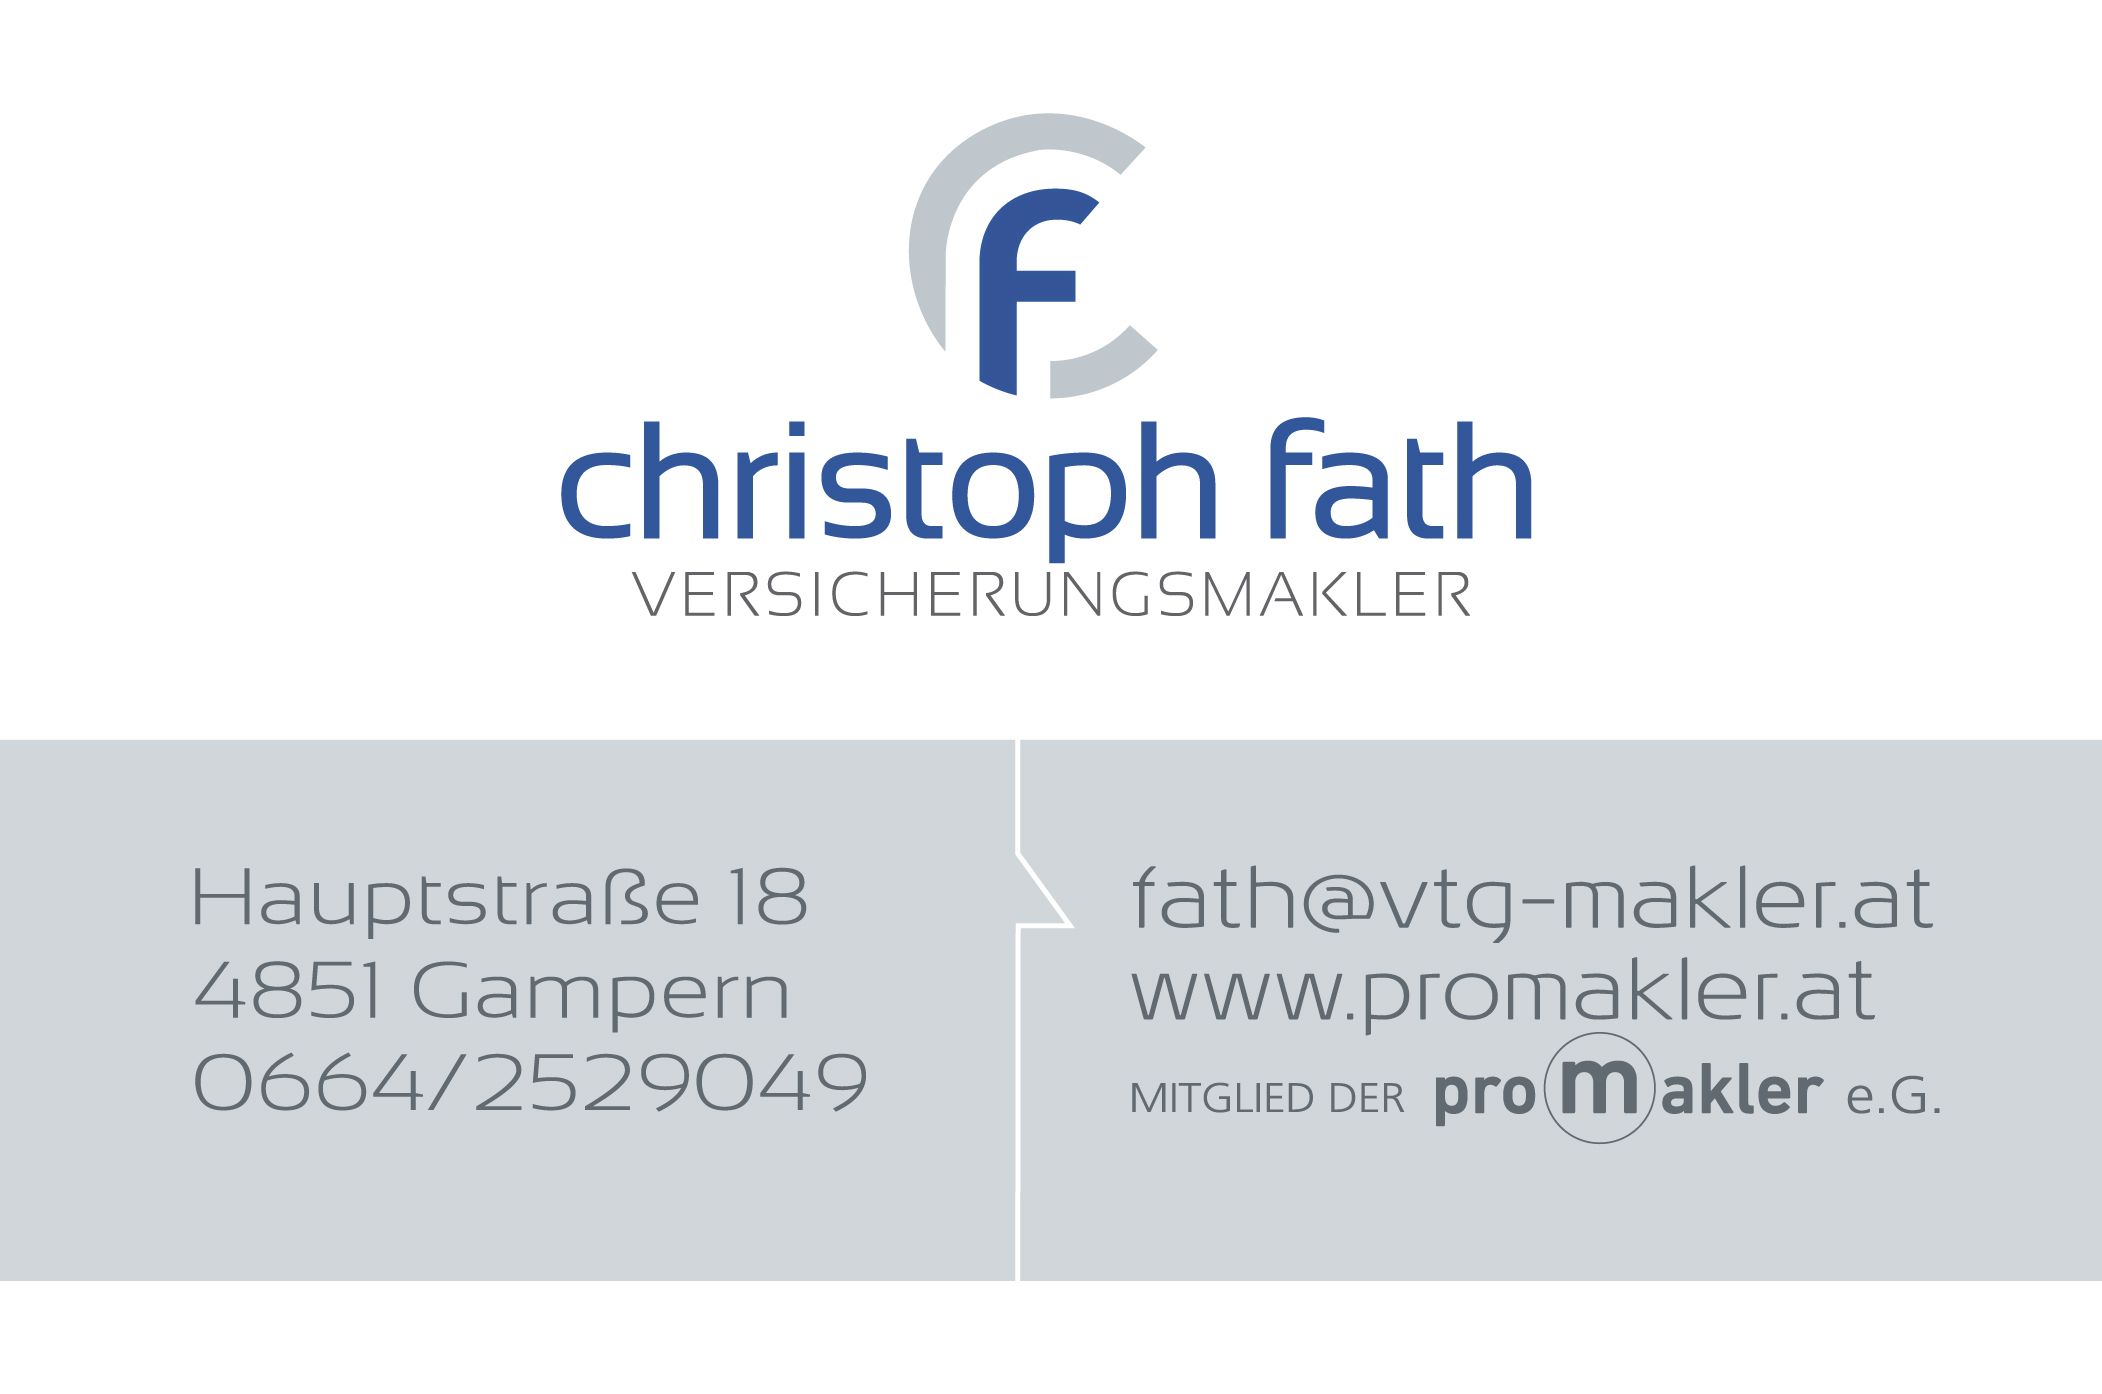 Christoph Fath Versicherungsmakler